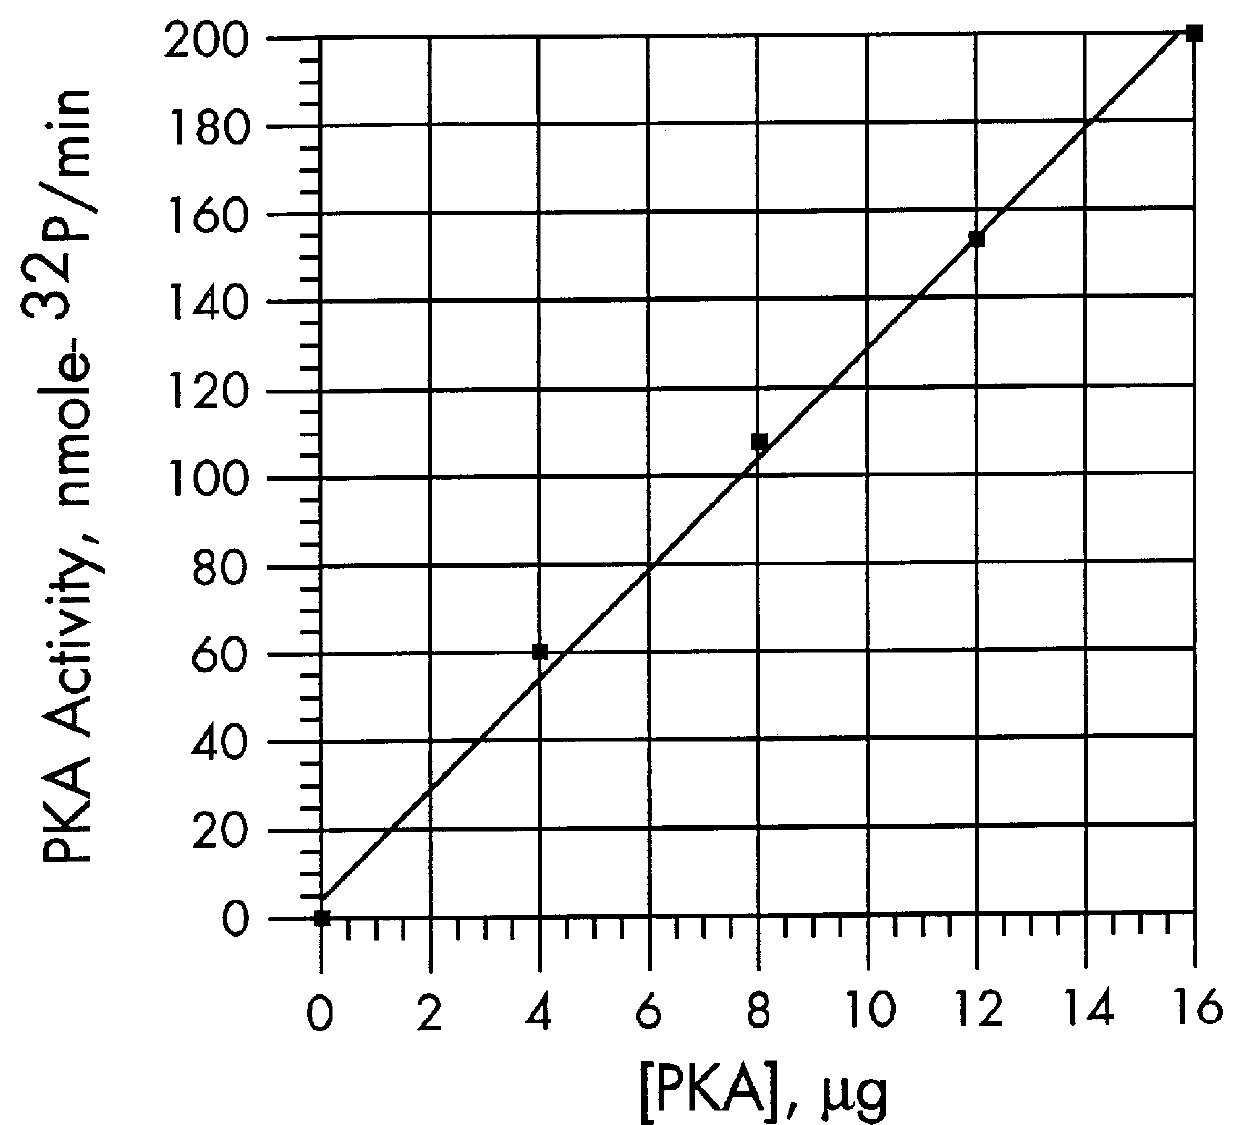 Quantitation of individual protein kinase activity